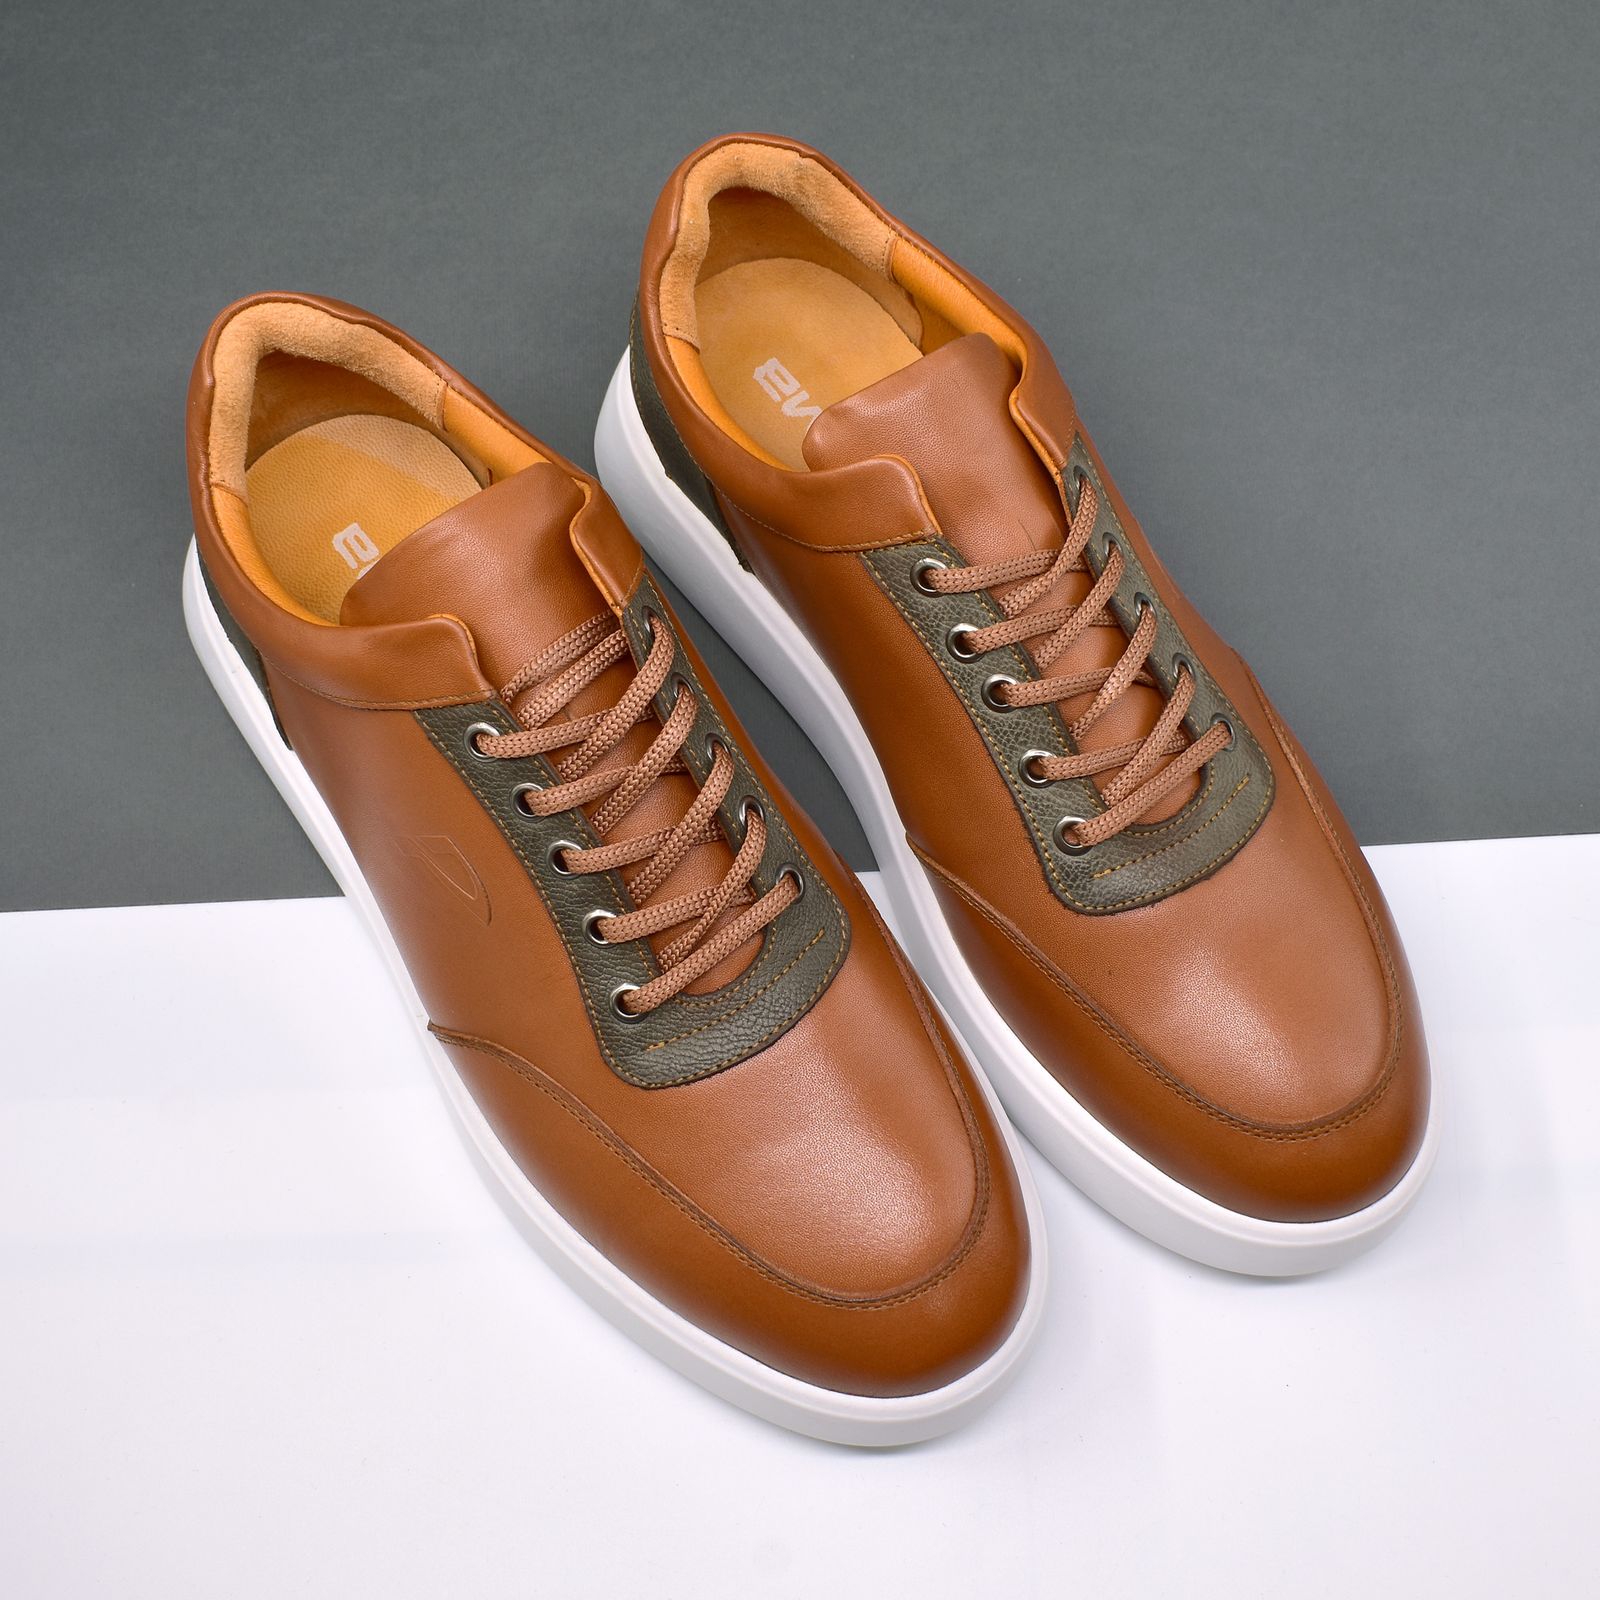 کفش روزمره مردانه پاما مدل ME-403 کد G1806 -  - 5